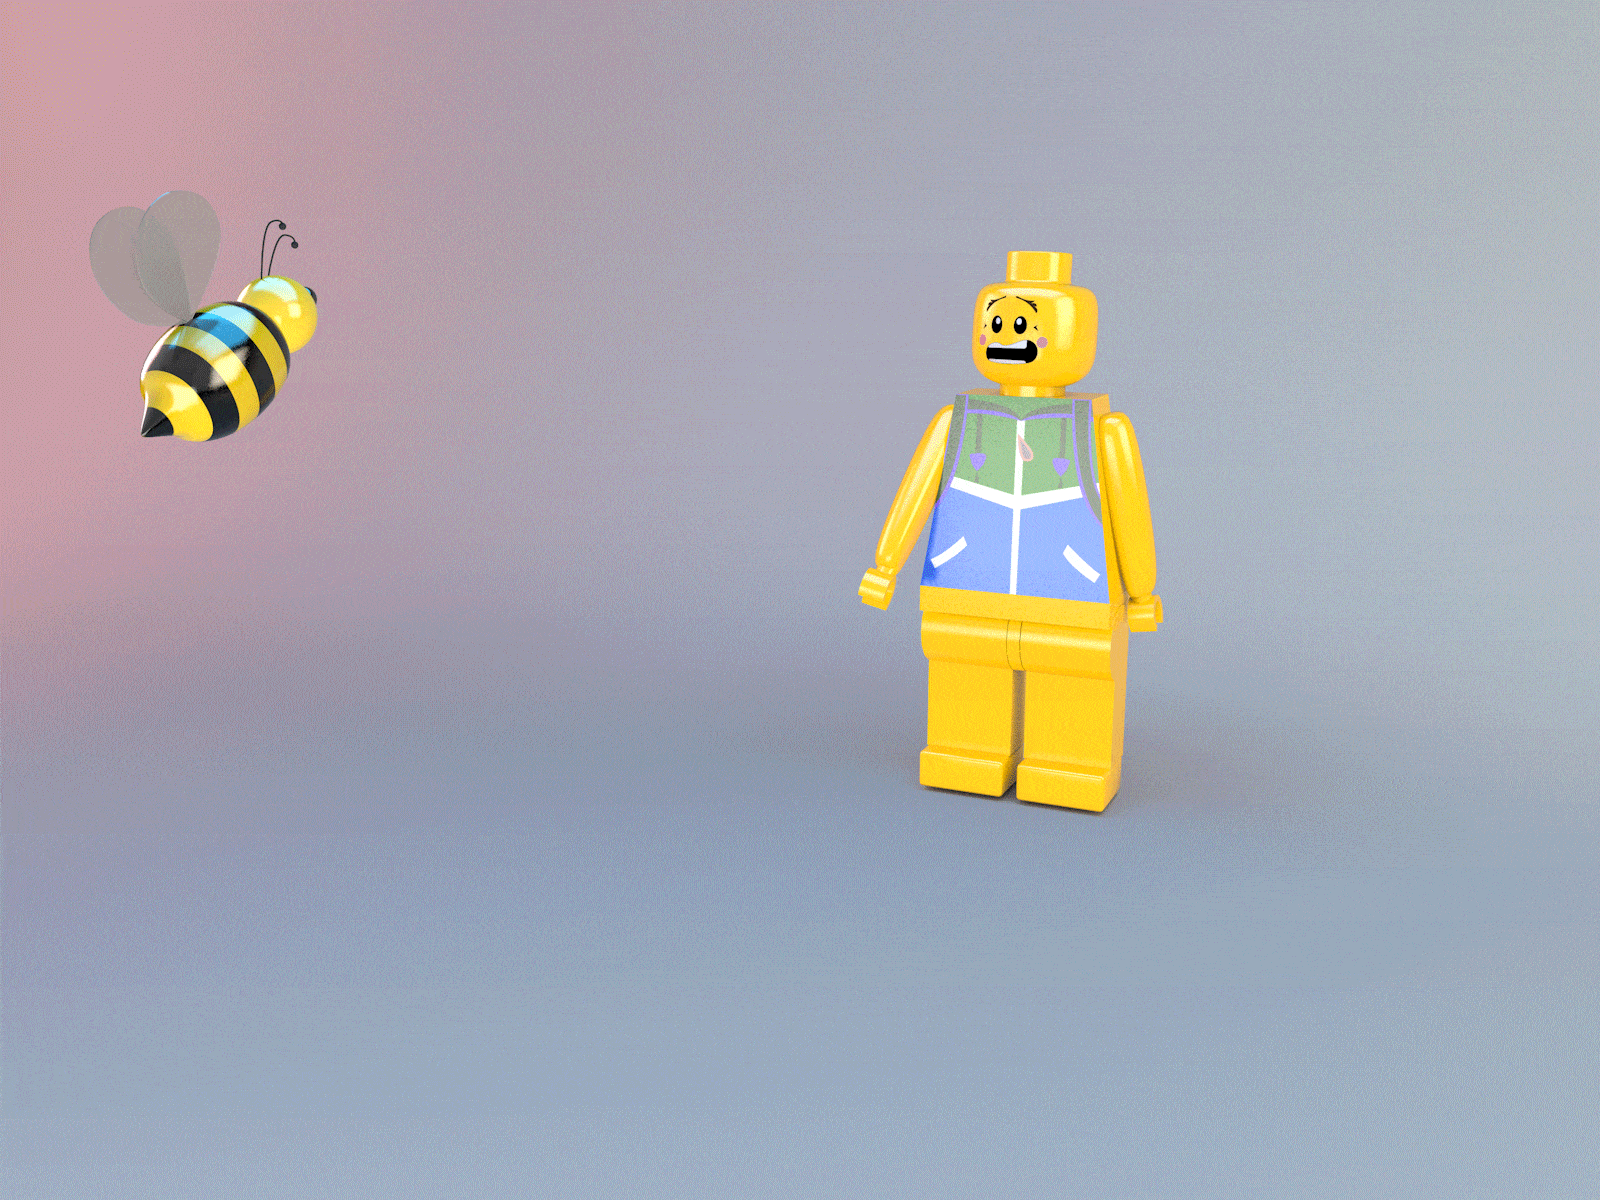 Lego and bee animation